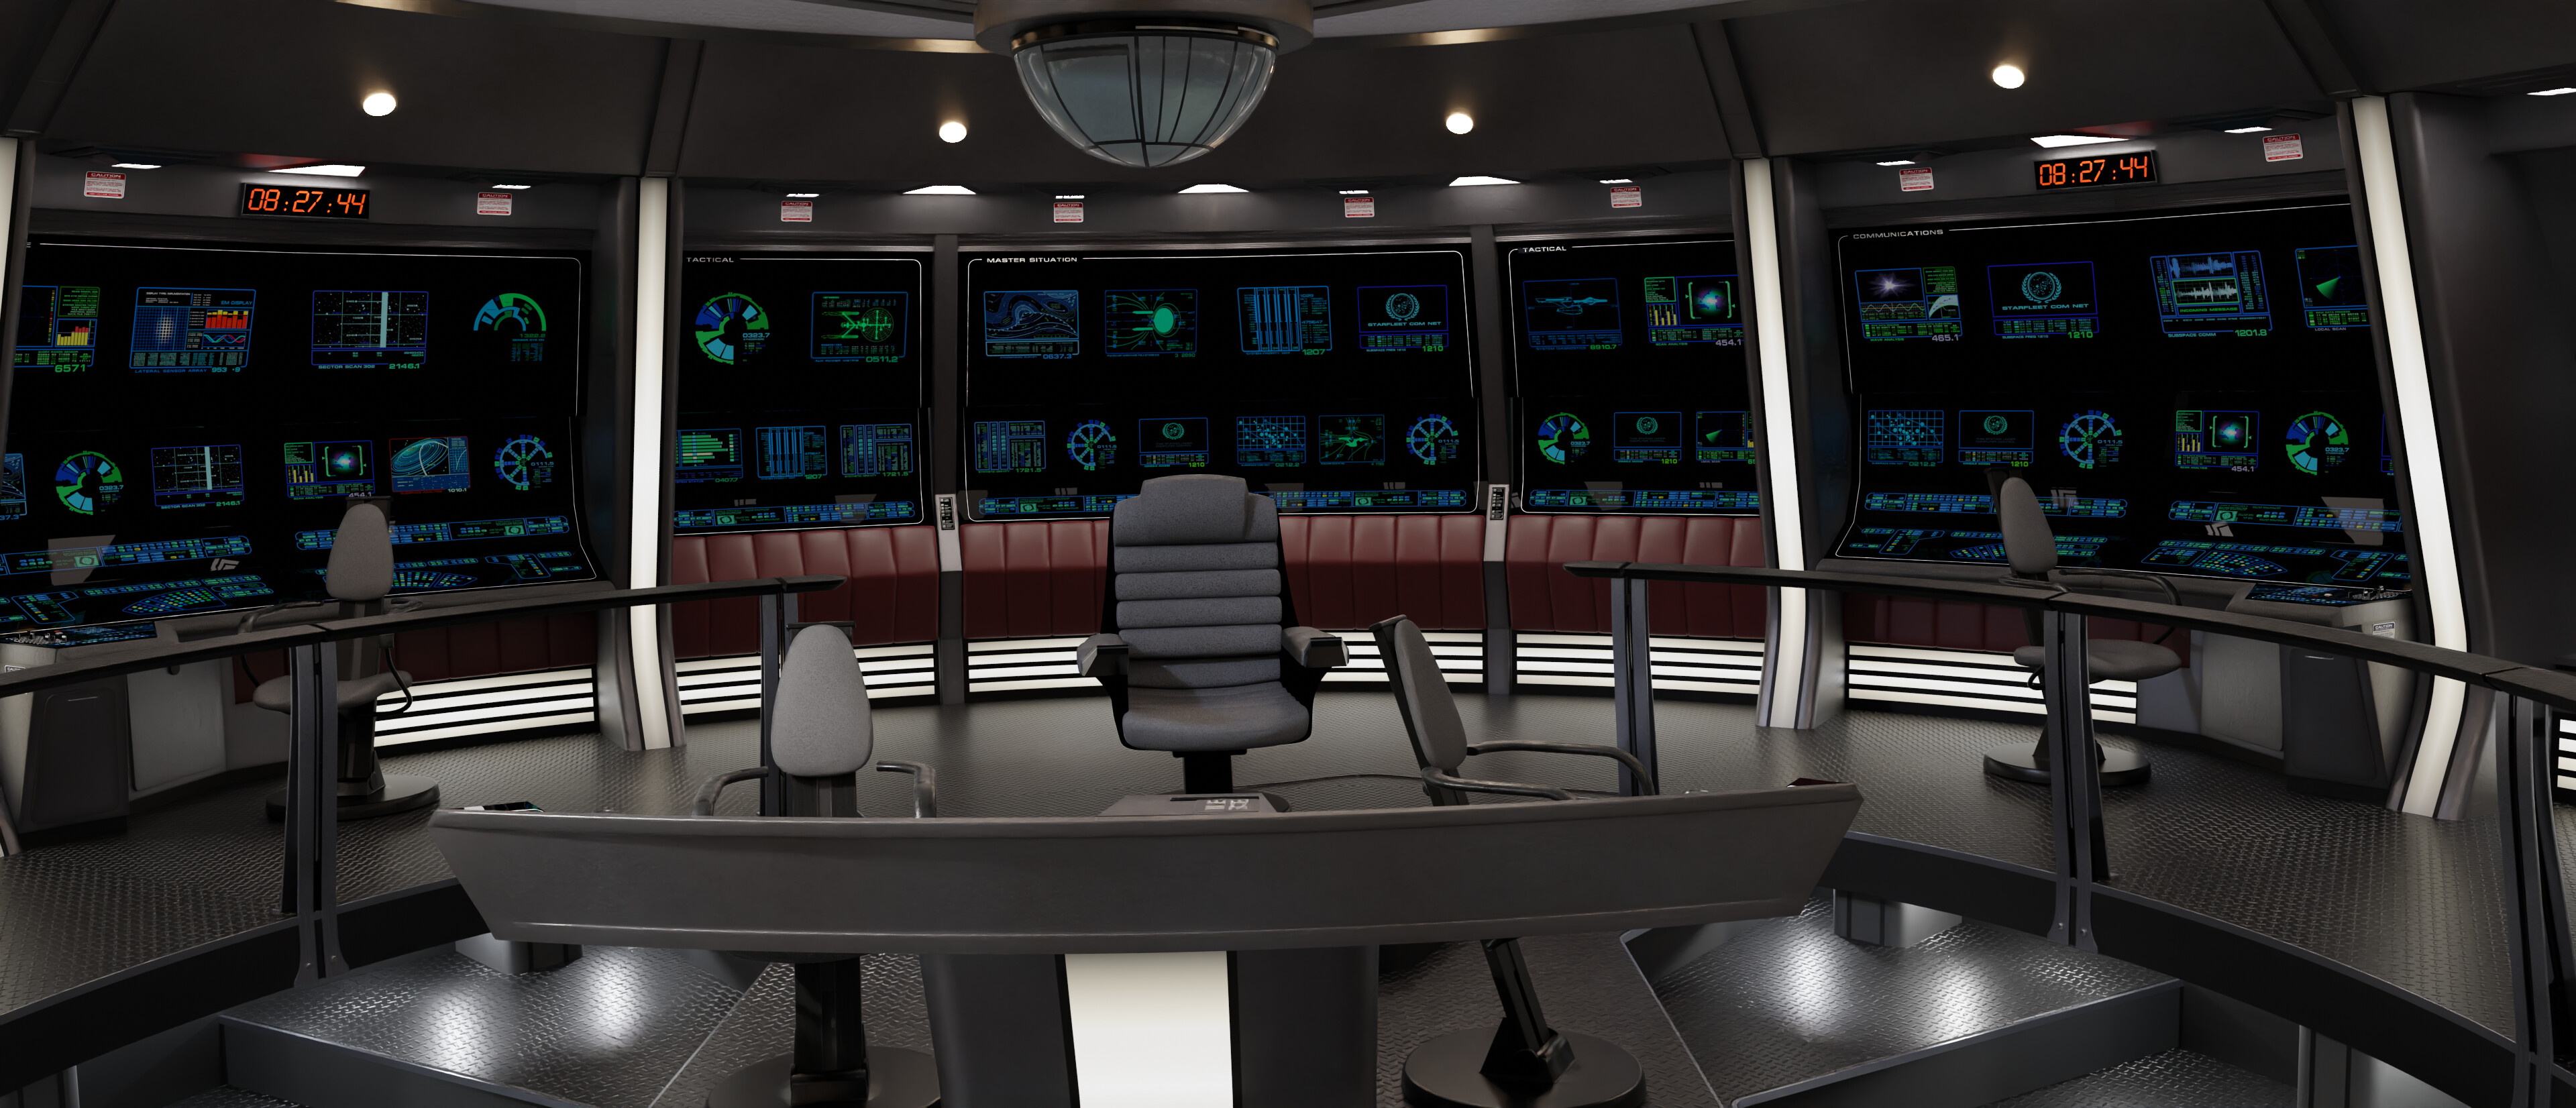 star trek enterprise 2022 bridge